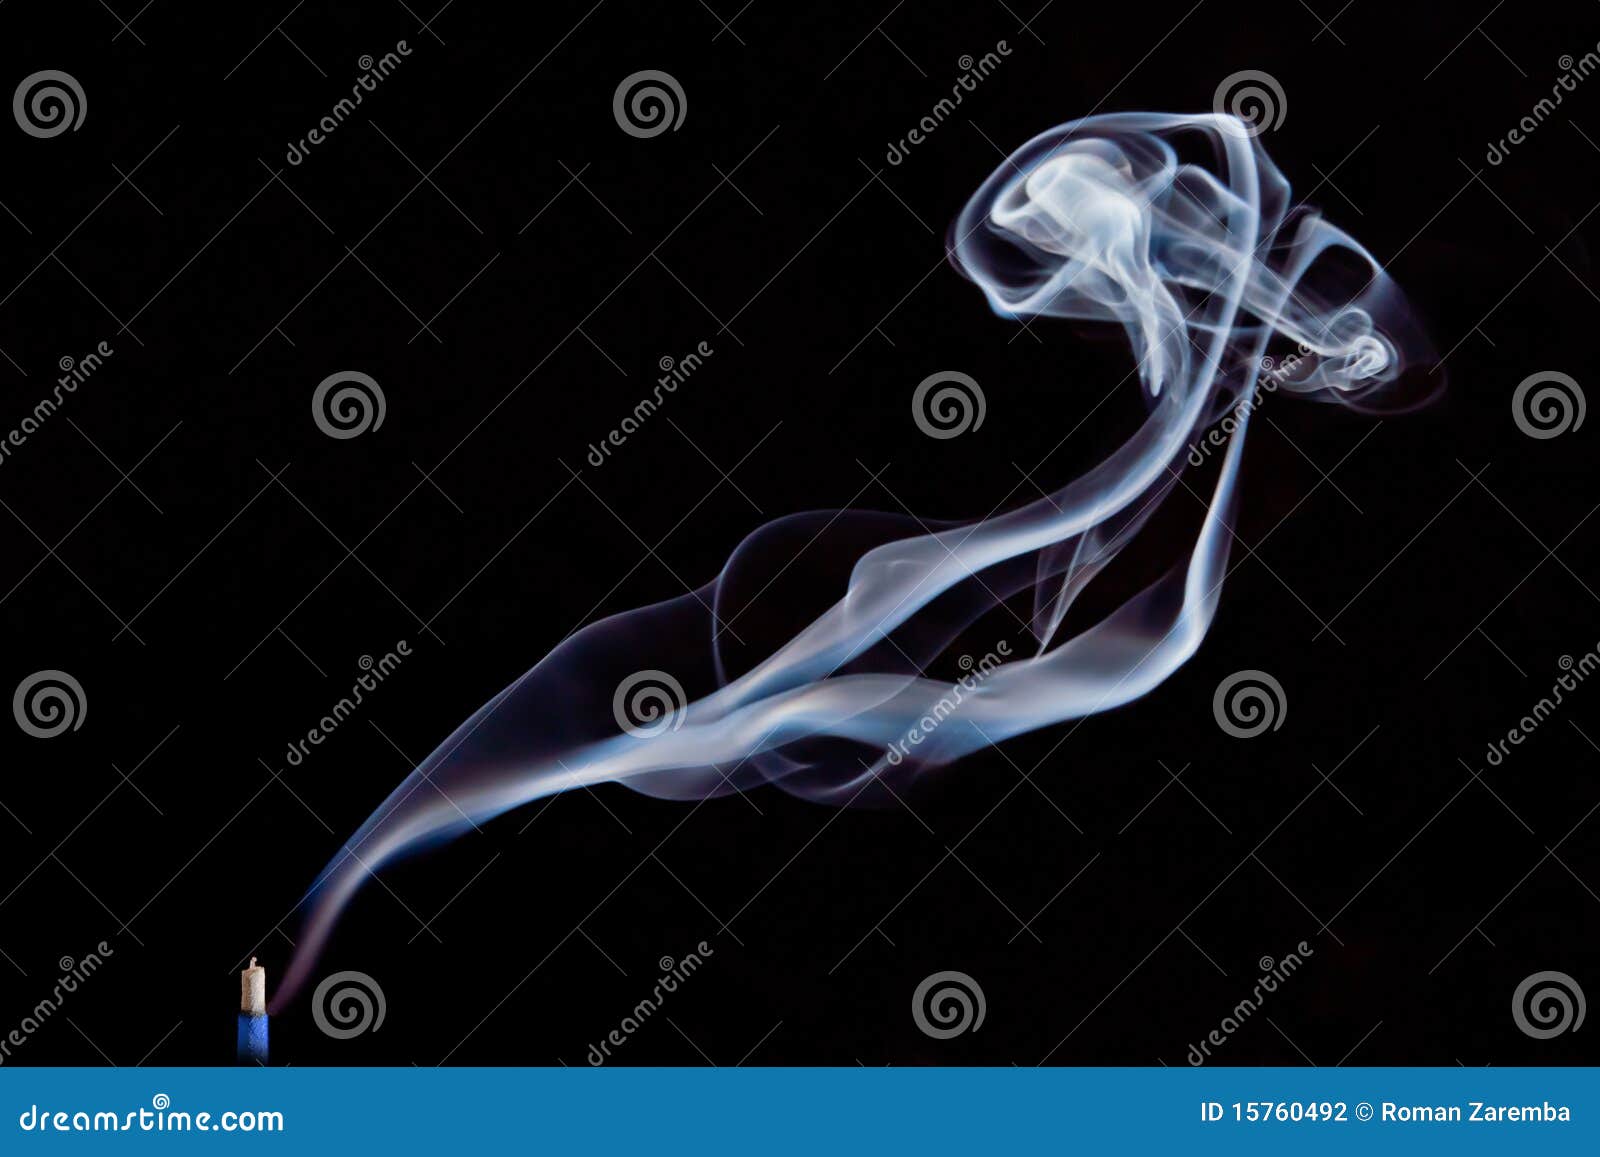 smoke, incense stick